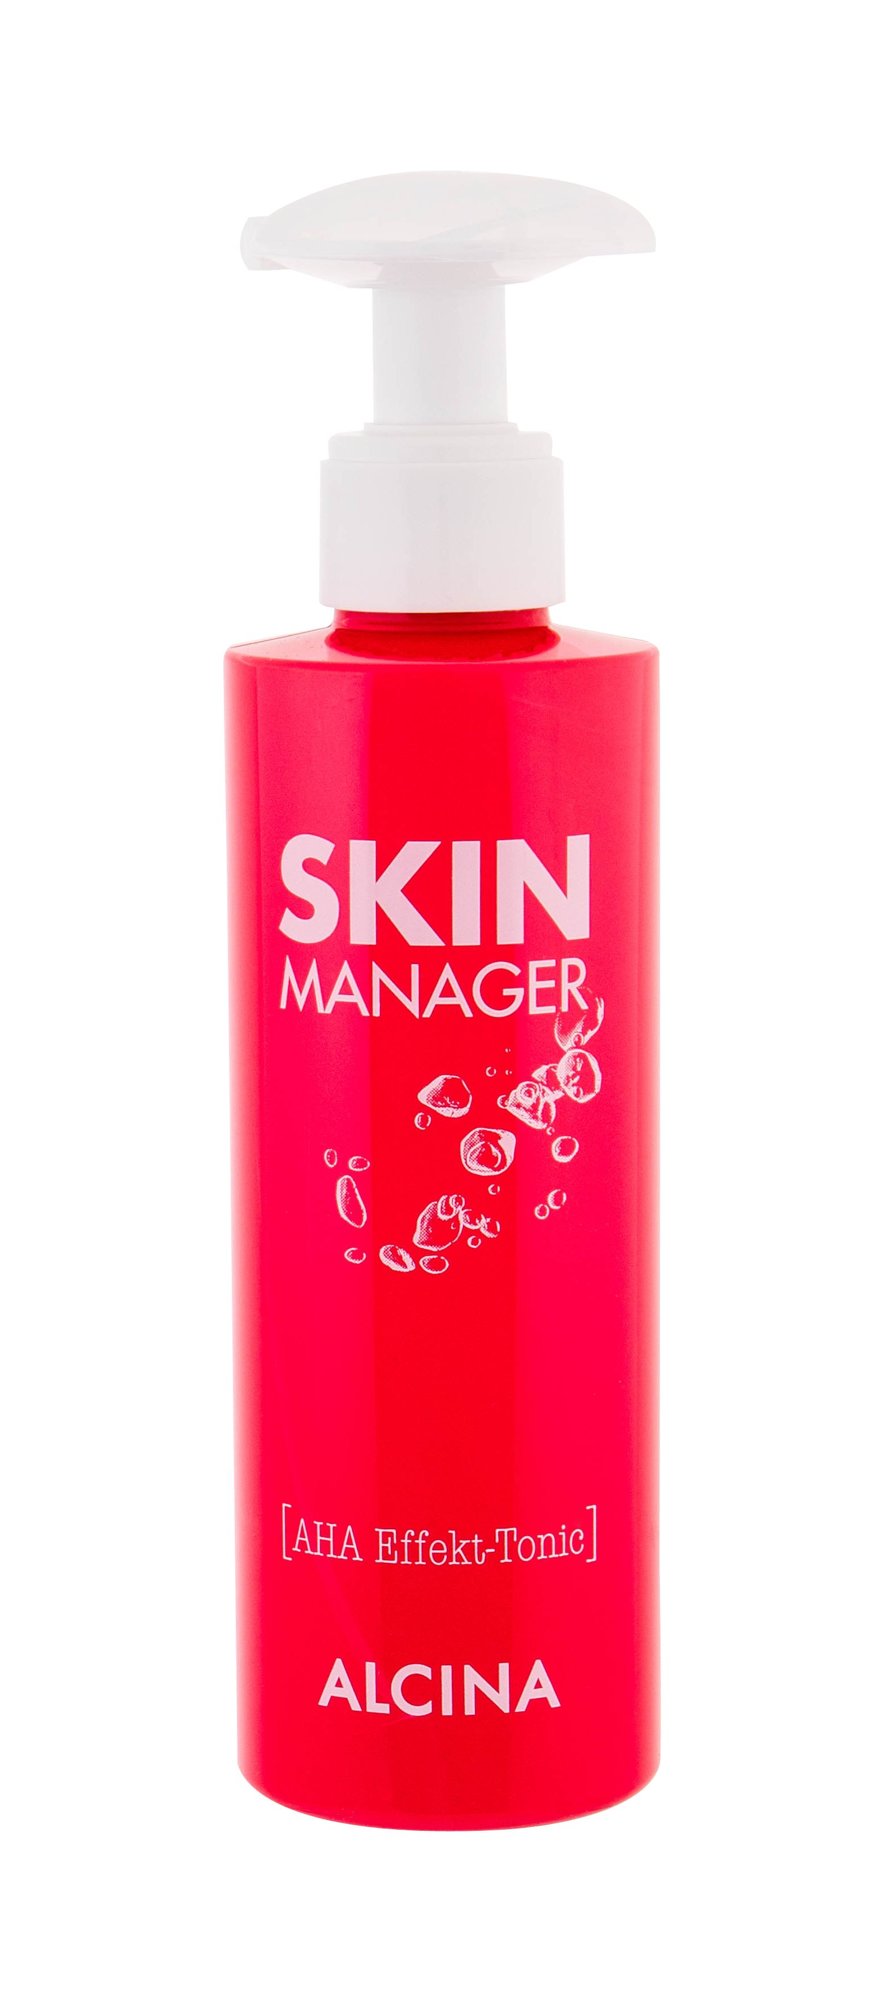 ALCINA Skin Manager AHA Effekt Tonic 190ml valomasis vanduo veidui (Pažeista pakuotė)